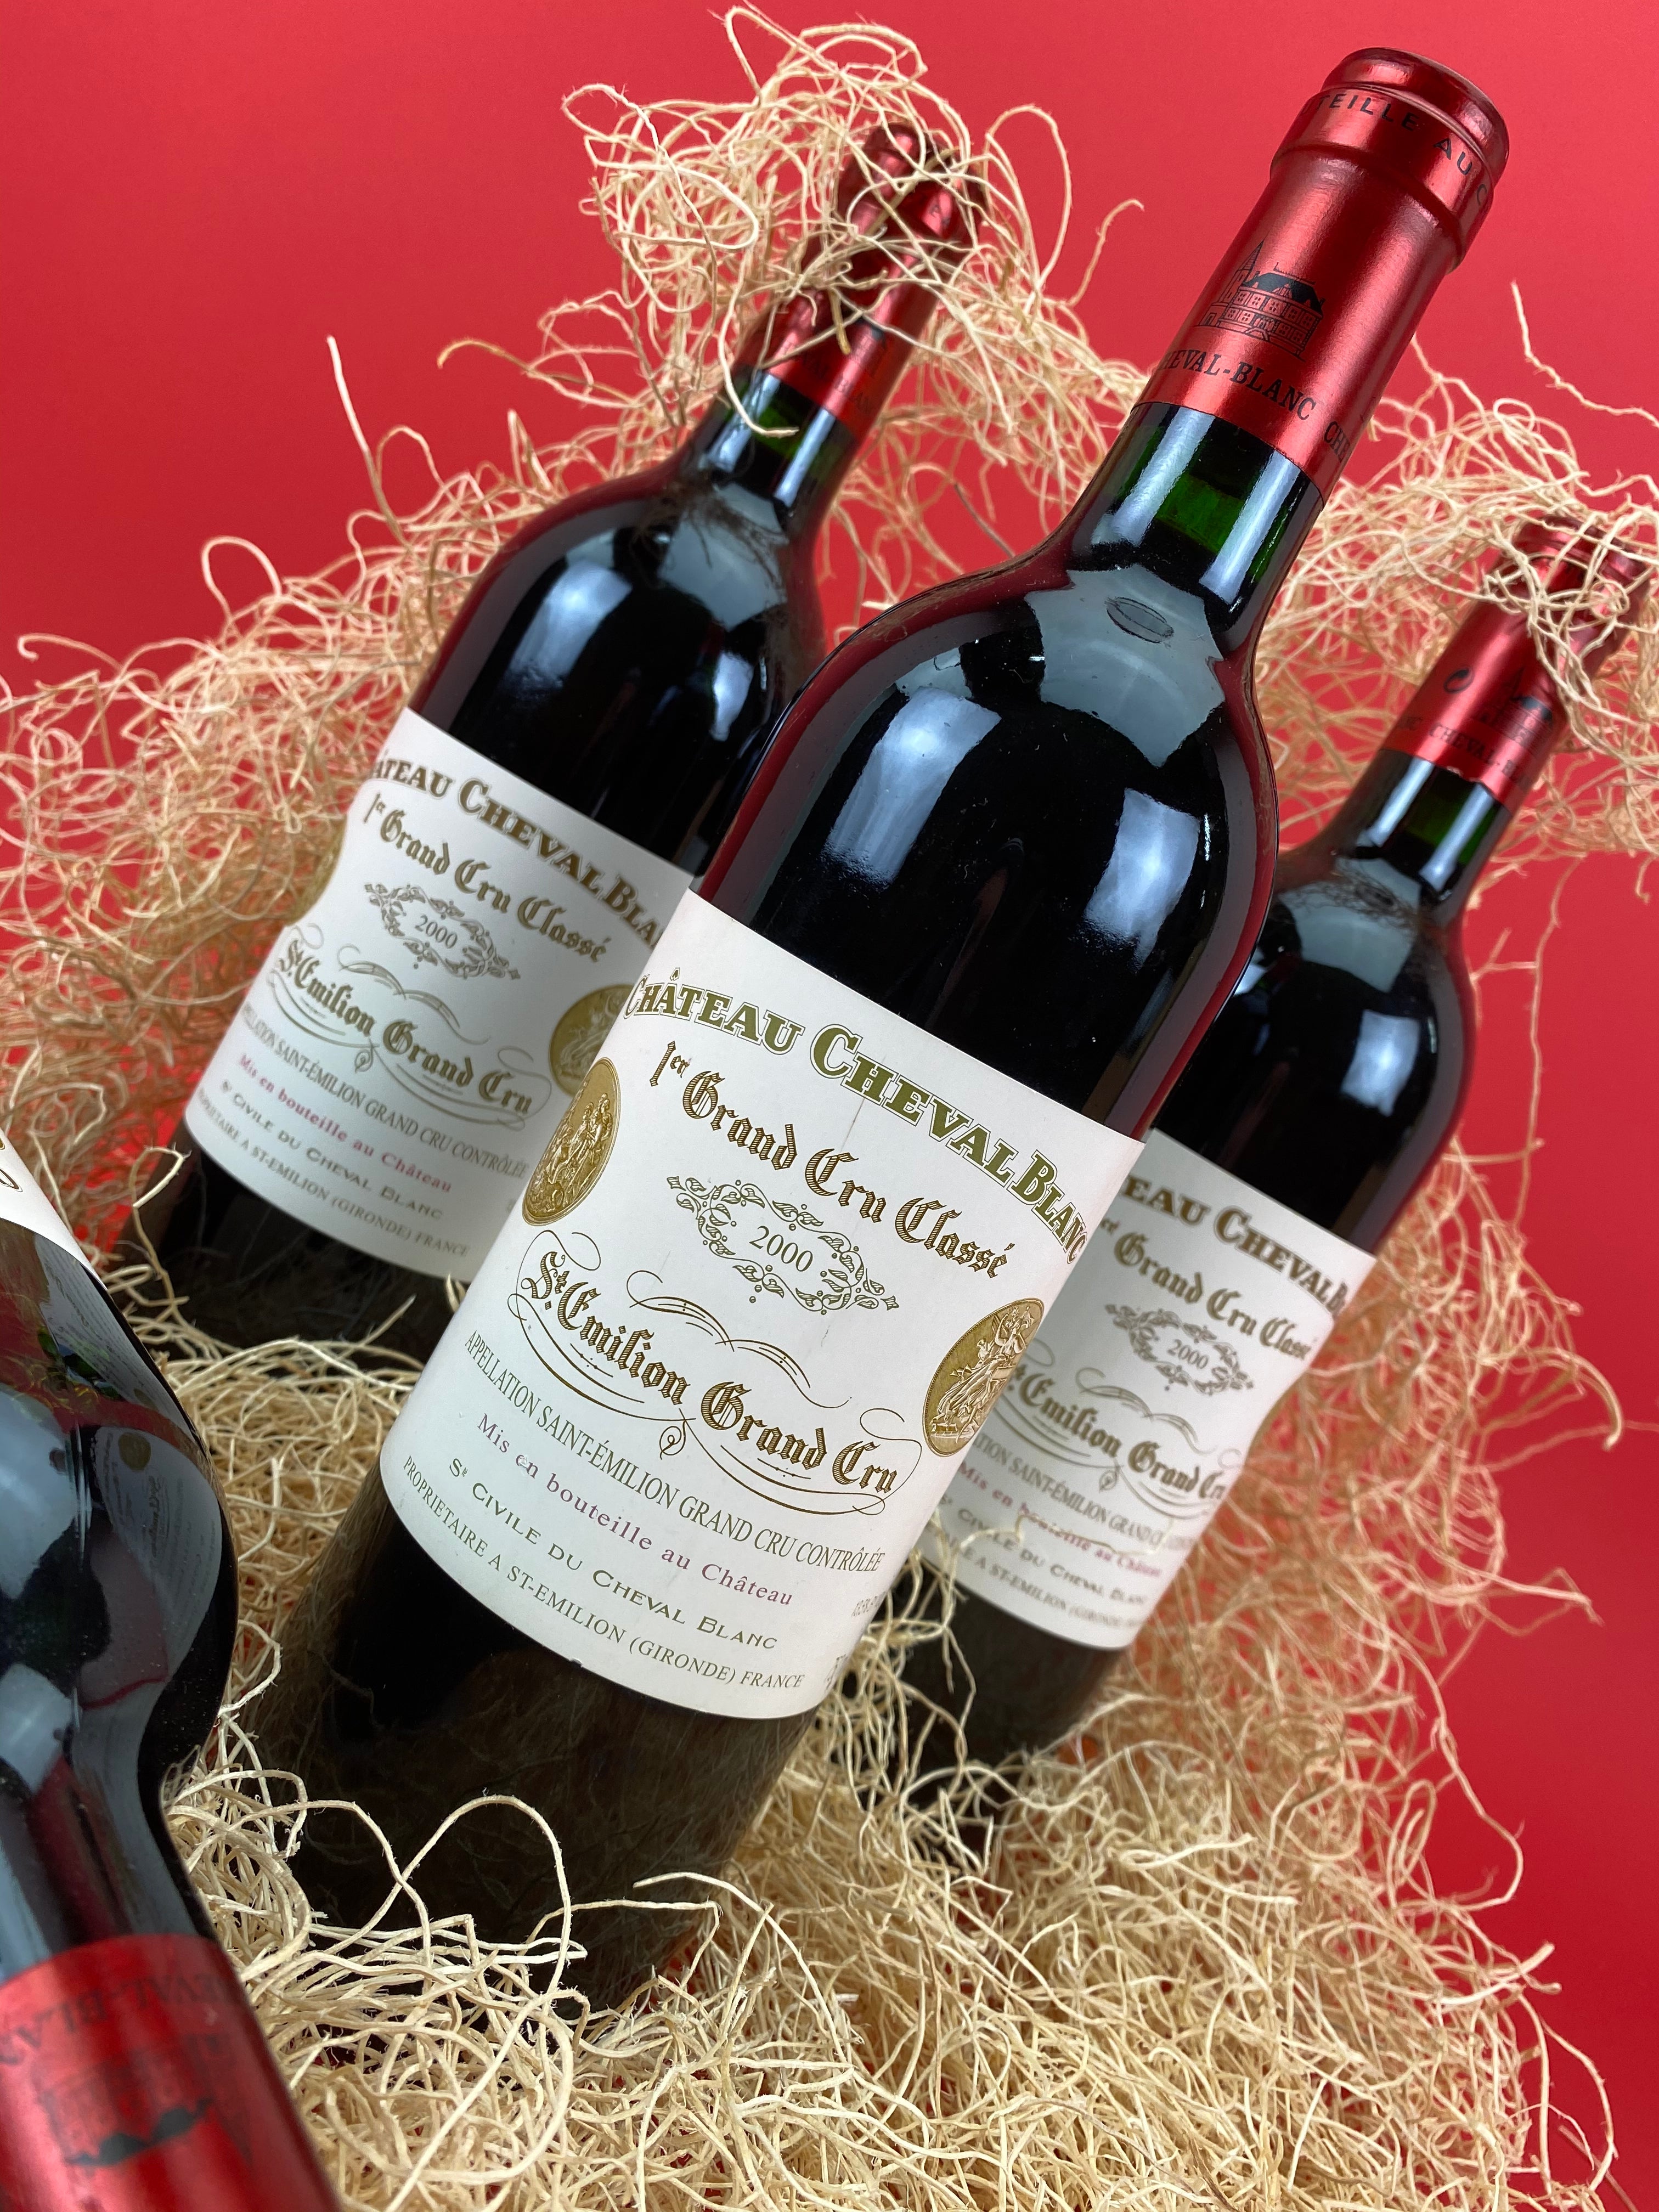 Chateau Cheval Blanc - St. Emilion 1982 - Oneiro Fine Wine